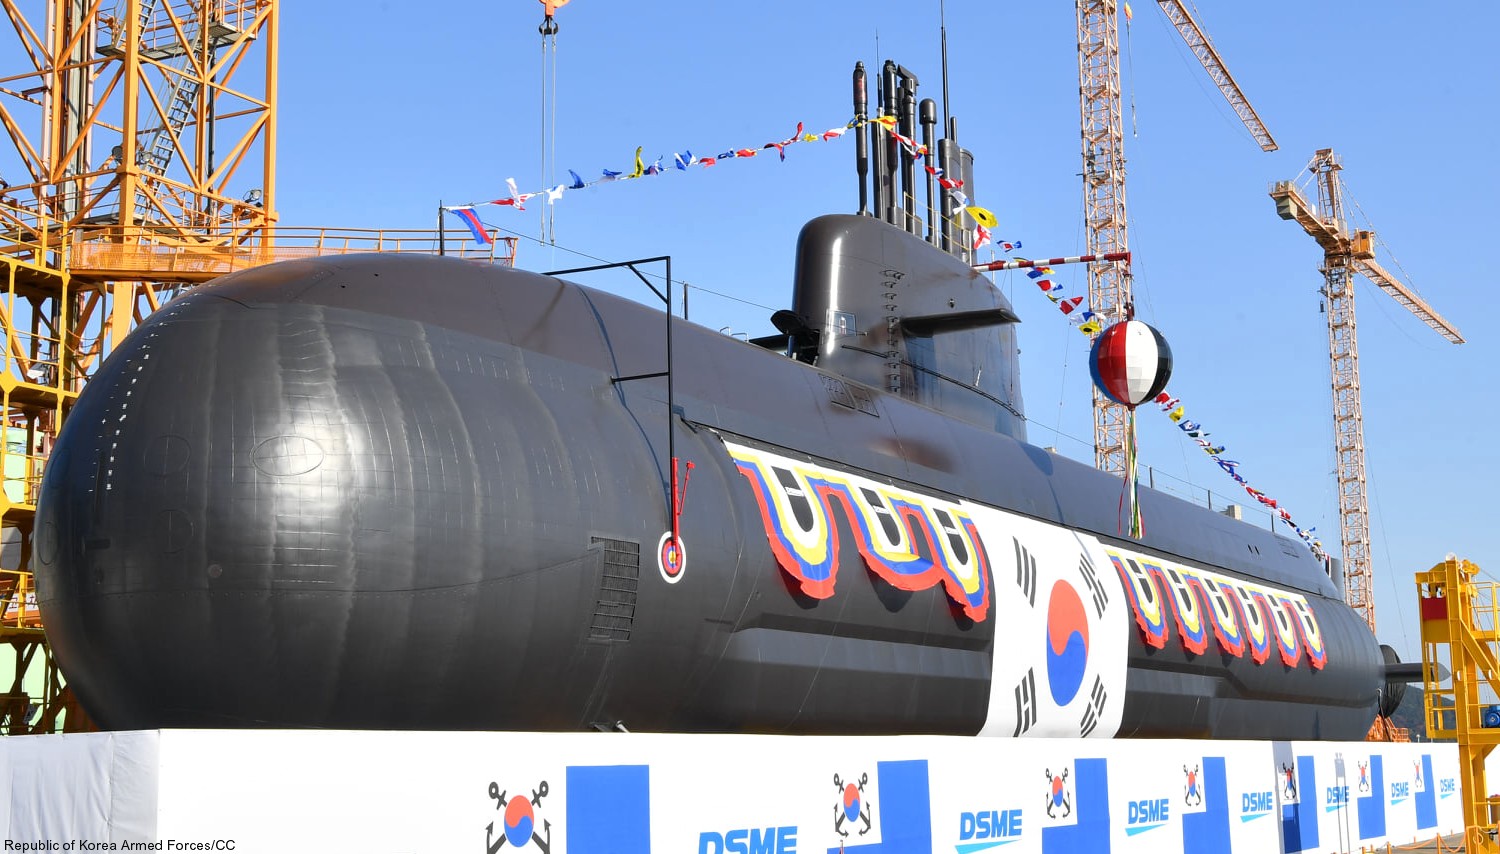 dosan ahn changho class submarine kss-iii republic of korean navy rokn roks tiger shark torpedo ugm-84 harpoon ssm chonryong slcm missile hyonmoo slbm 03x